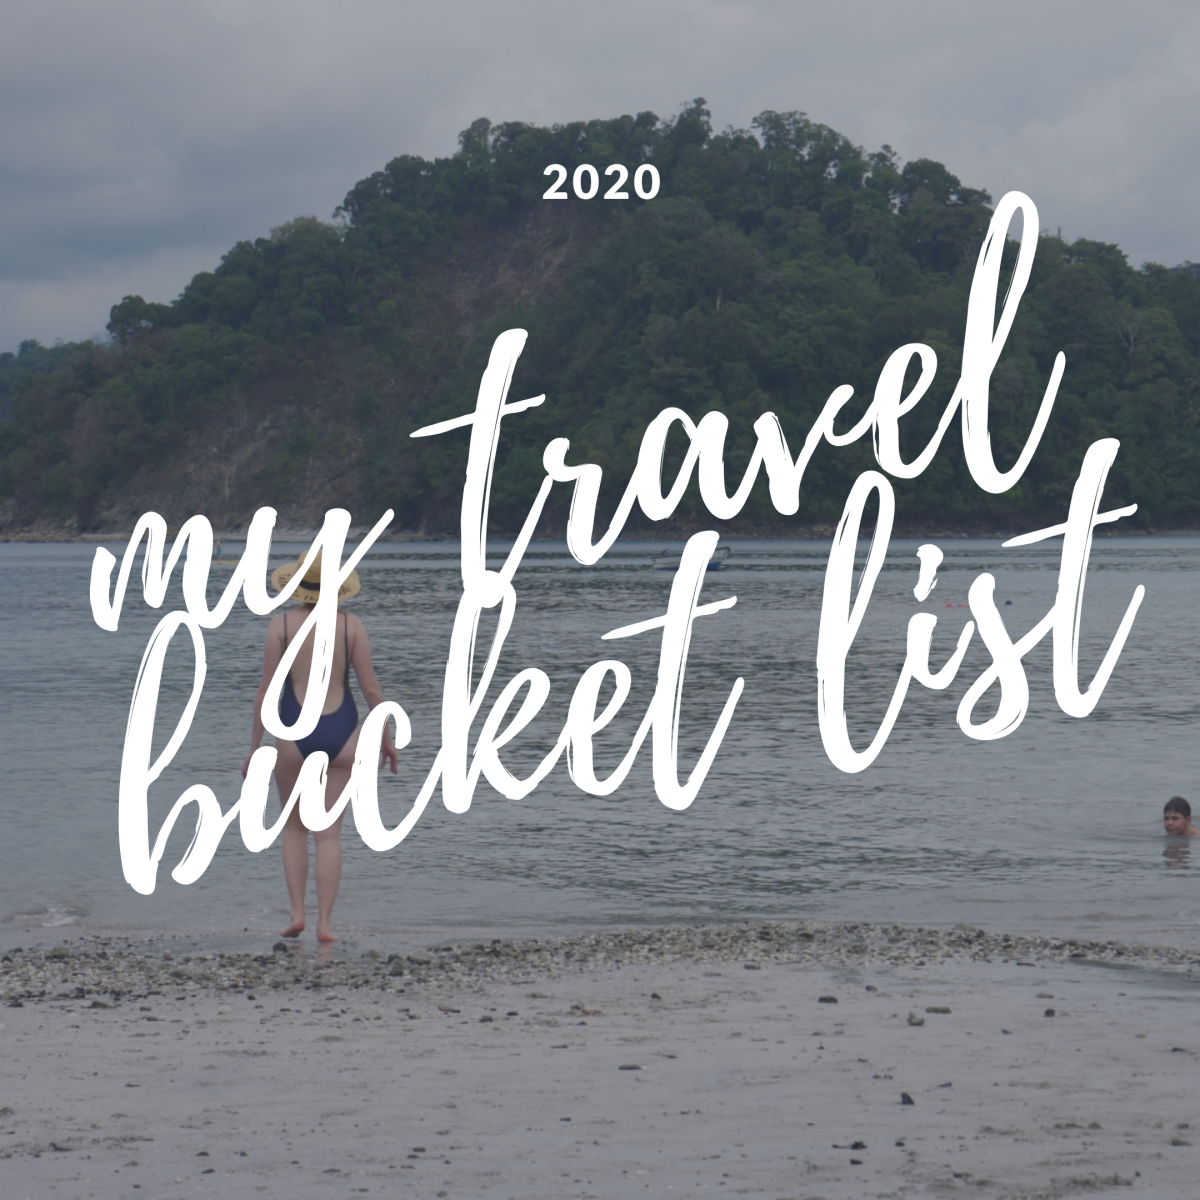 My Travel Bucket List 2020